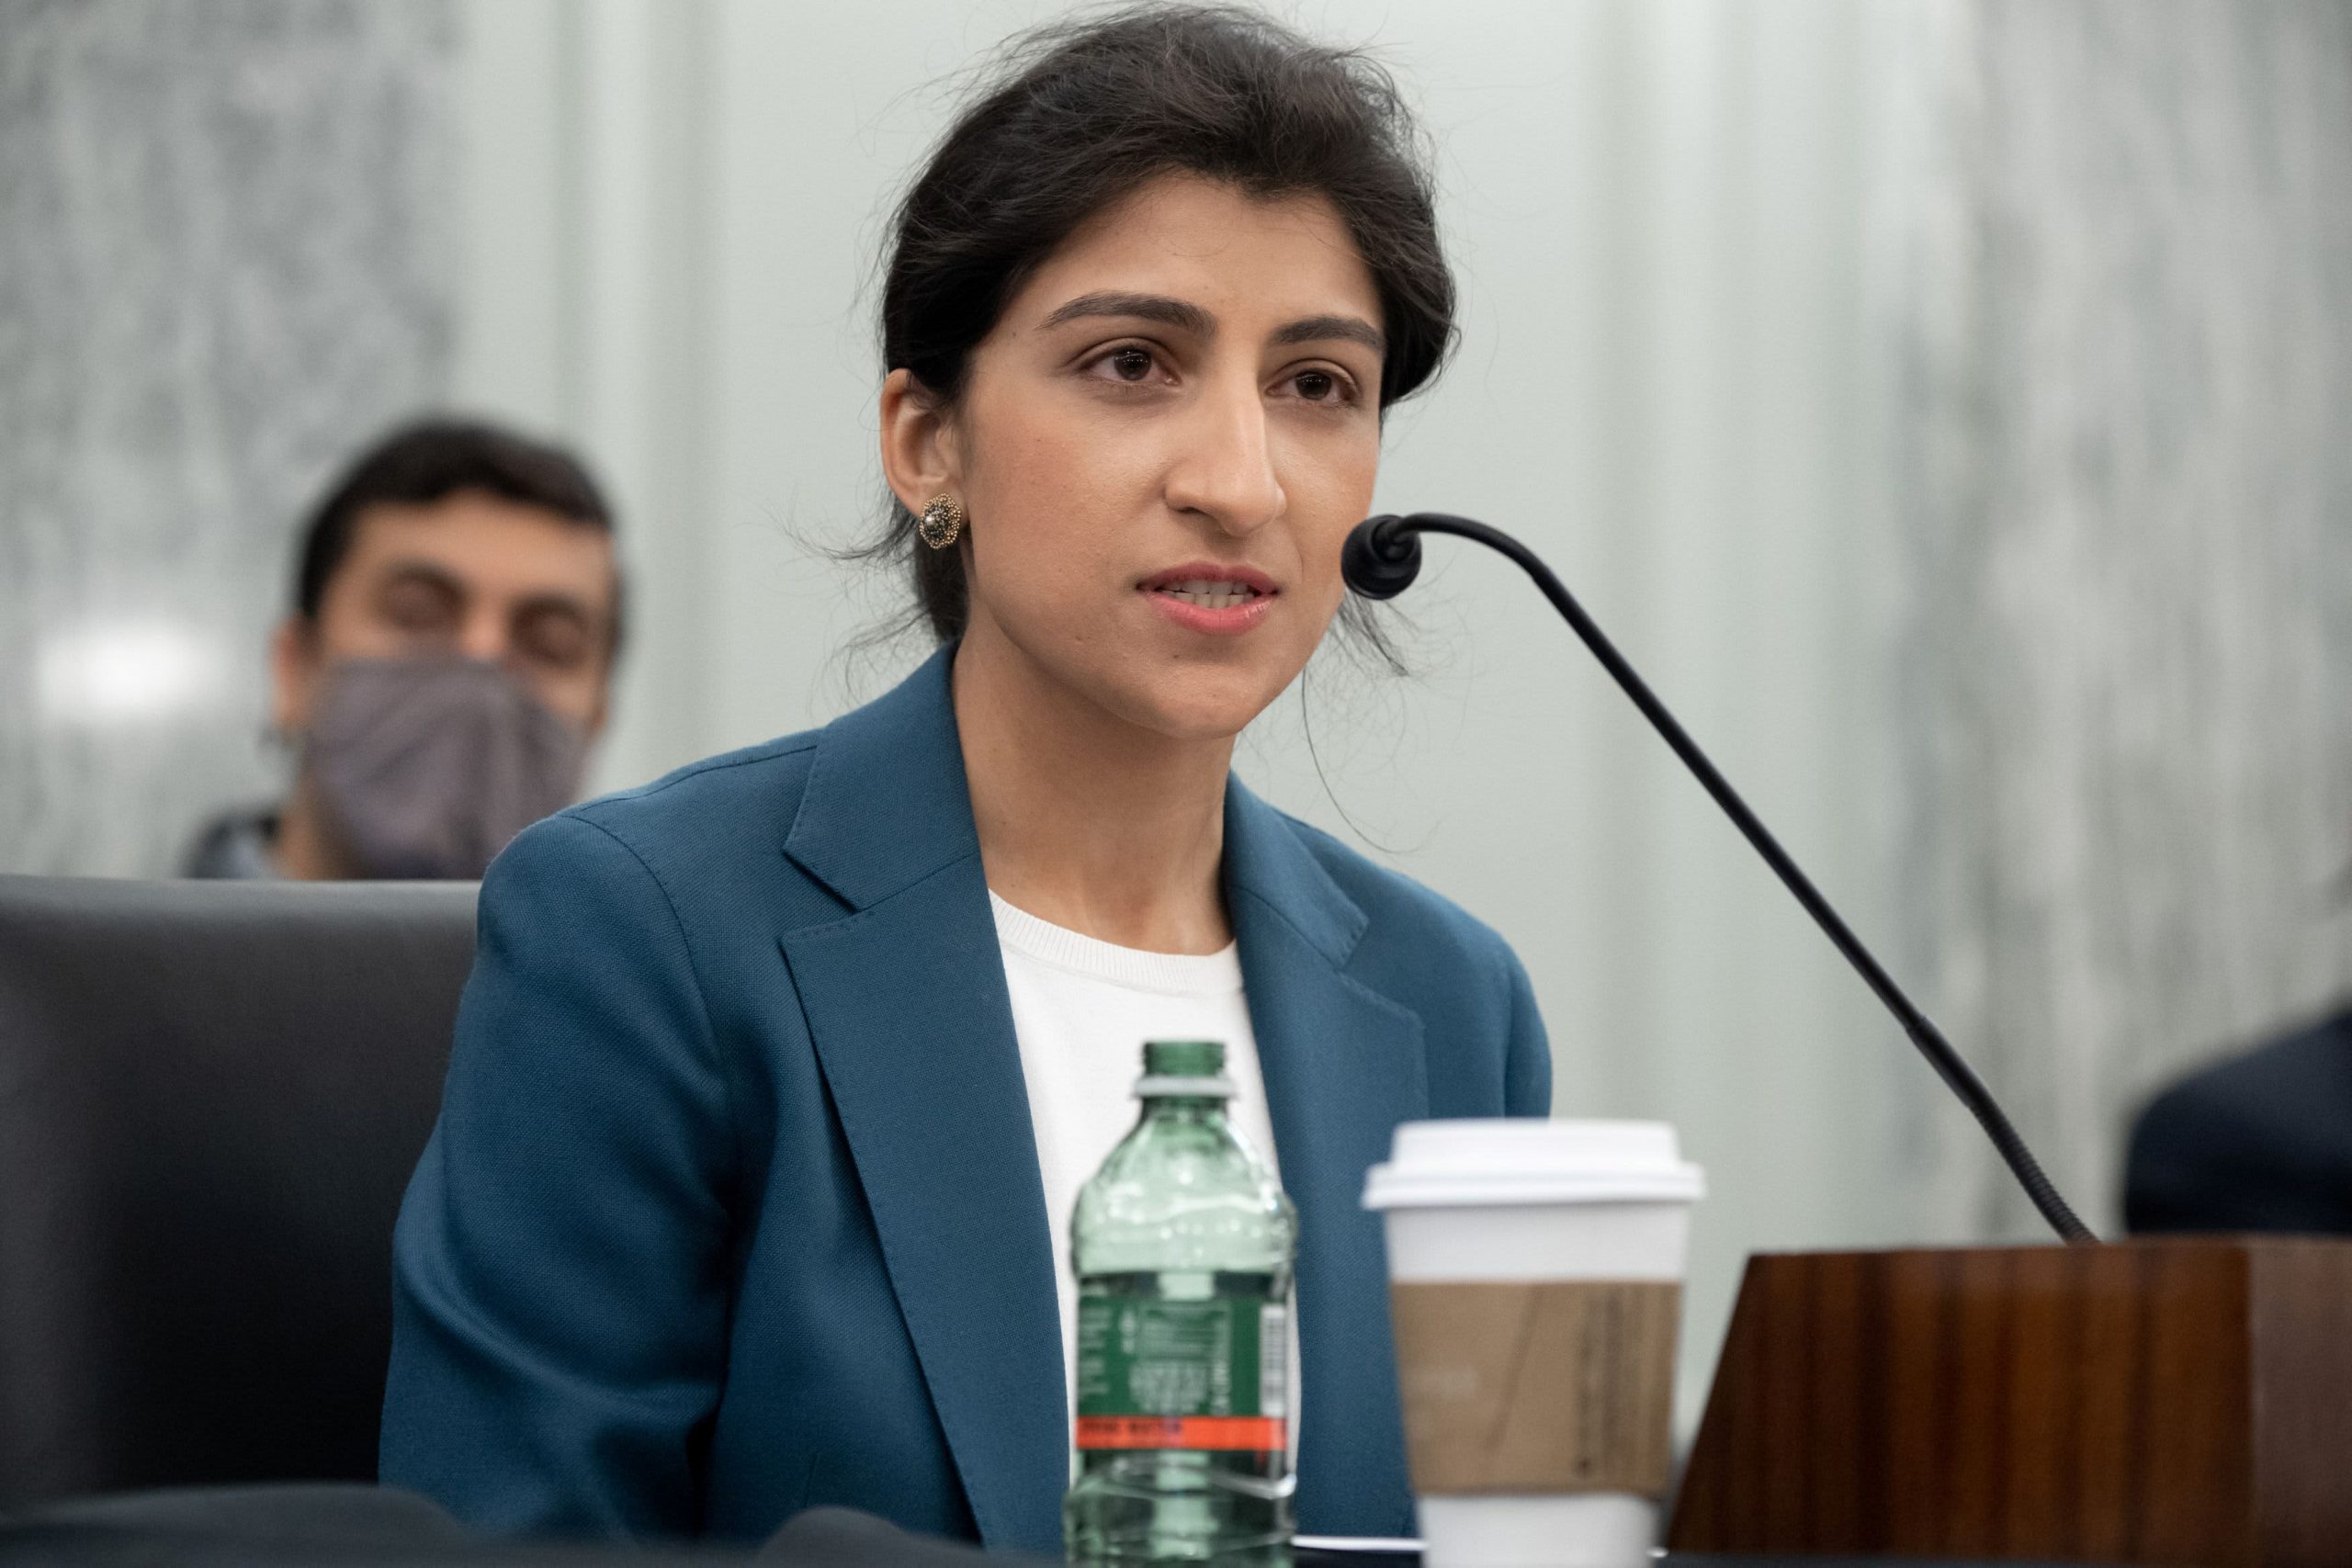 Senate committee advances Big Tech critic Lina Khan's nomination to the FTC